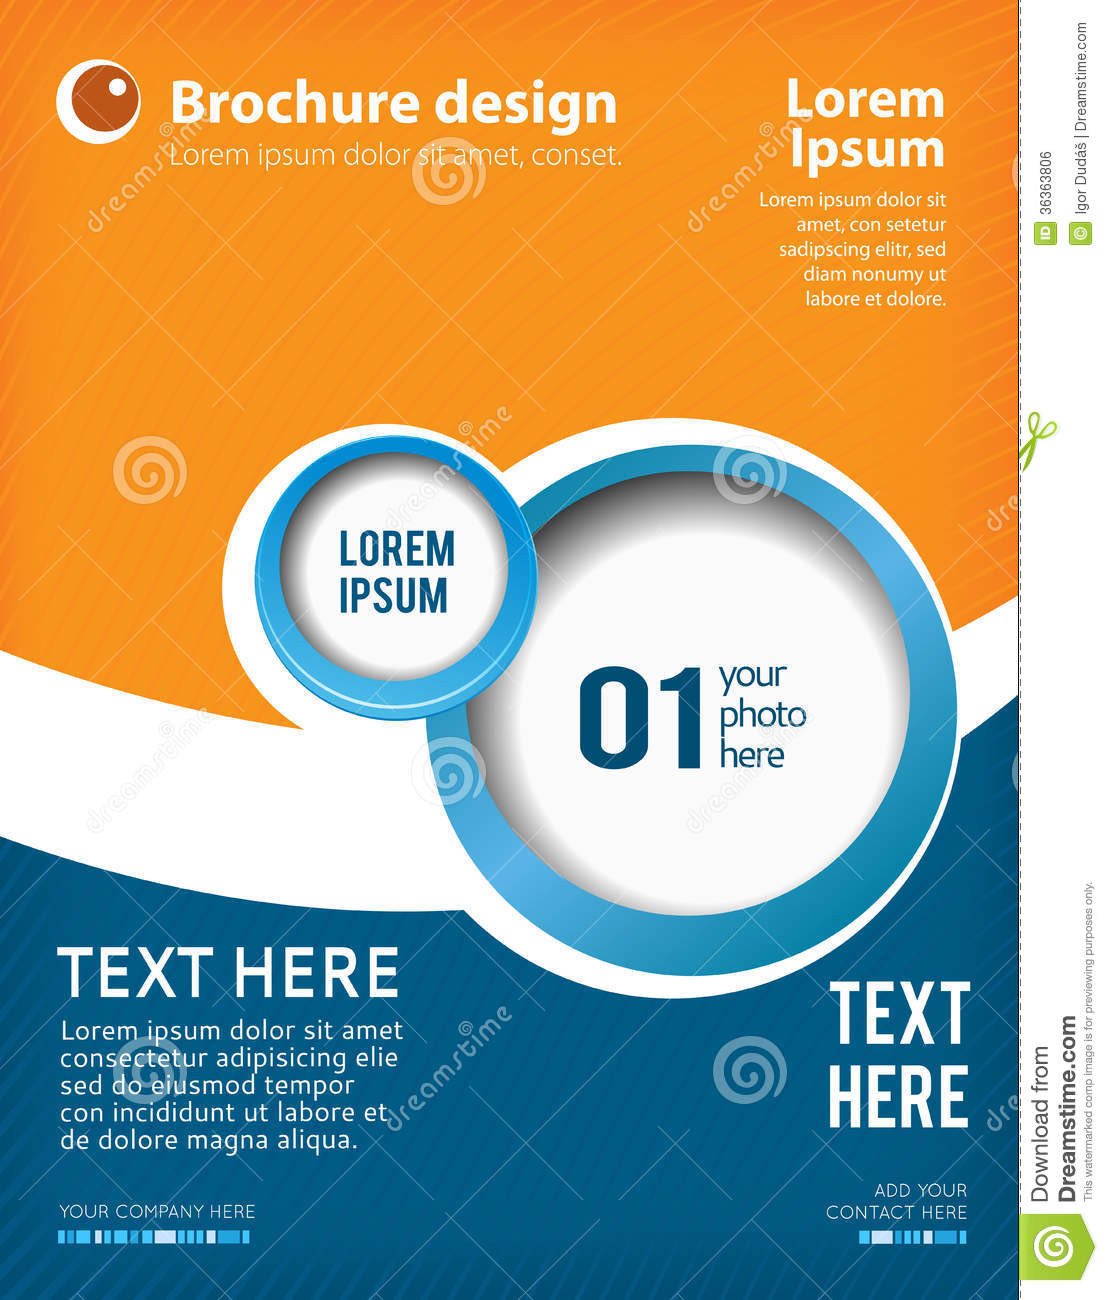 Free Poster Design Templates Design Layout Template Stock Illustration Illustration Of